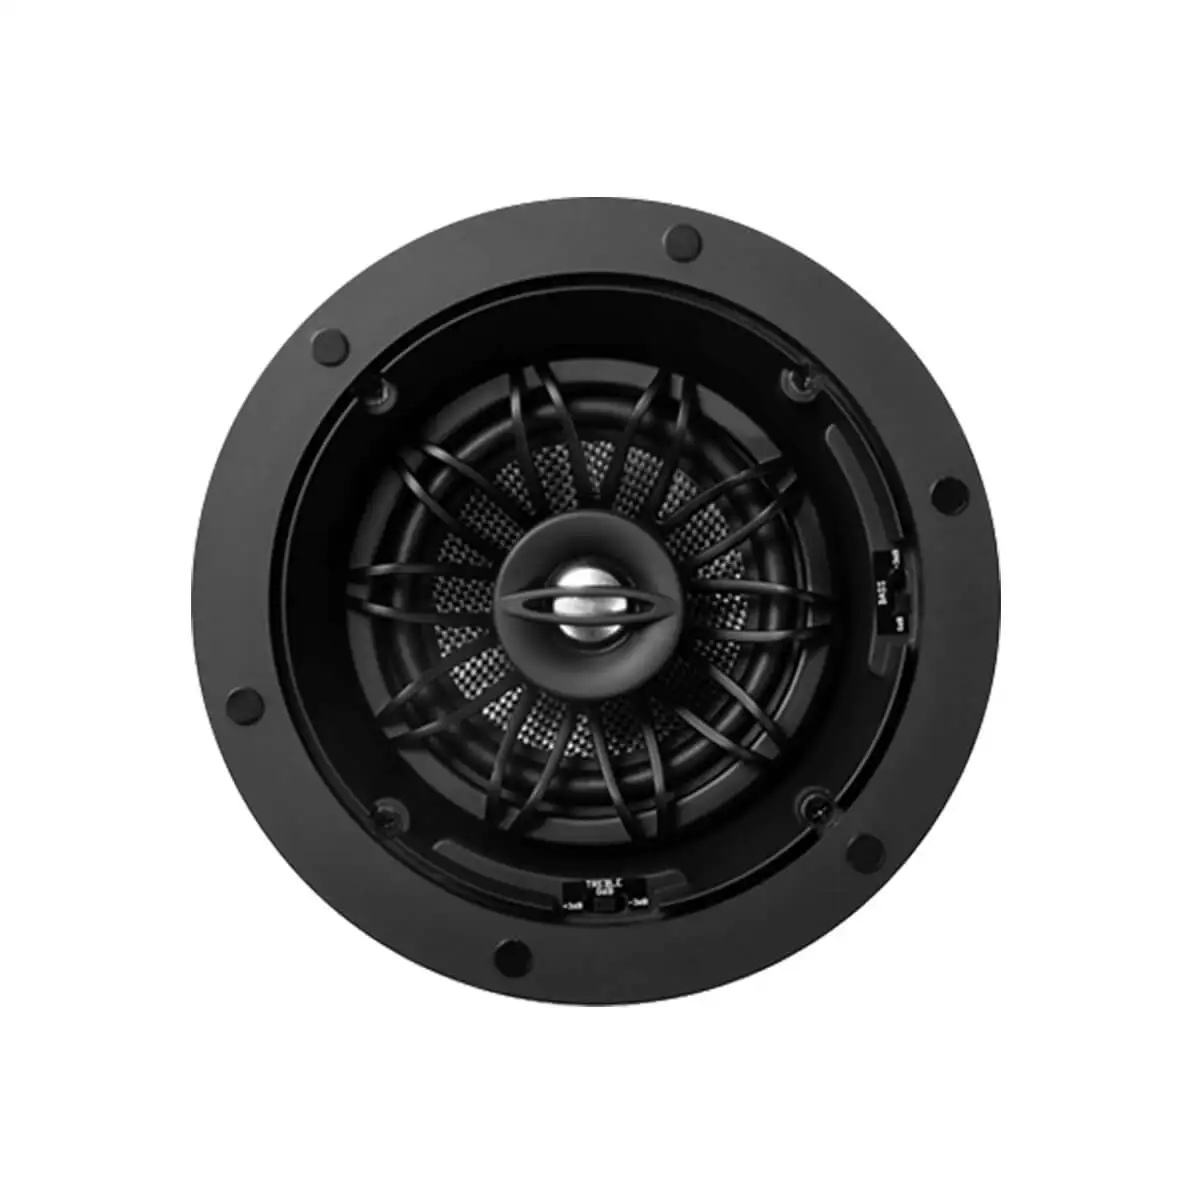 

RK525 High-Fidelity 5.25" 2 Way 60W Full Range In-Celing Speaker Home Theater Best Match for Wireless Home System, Black white